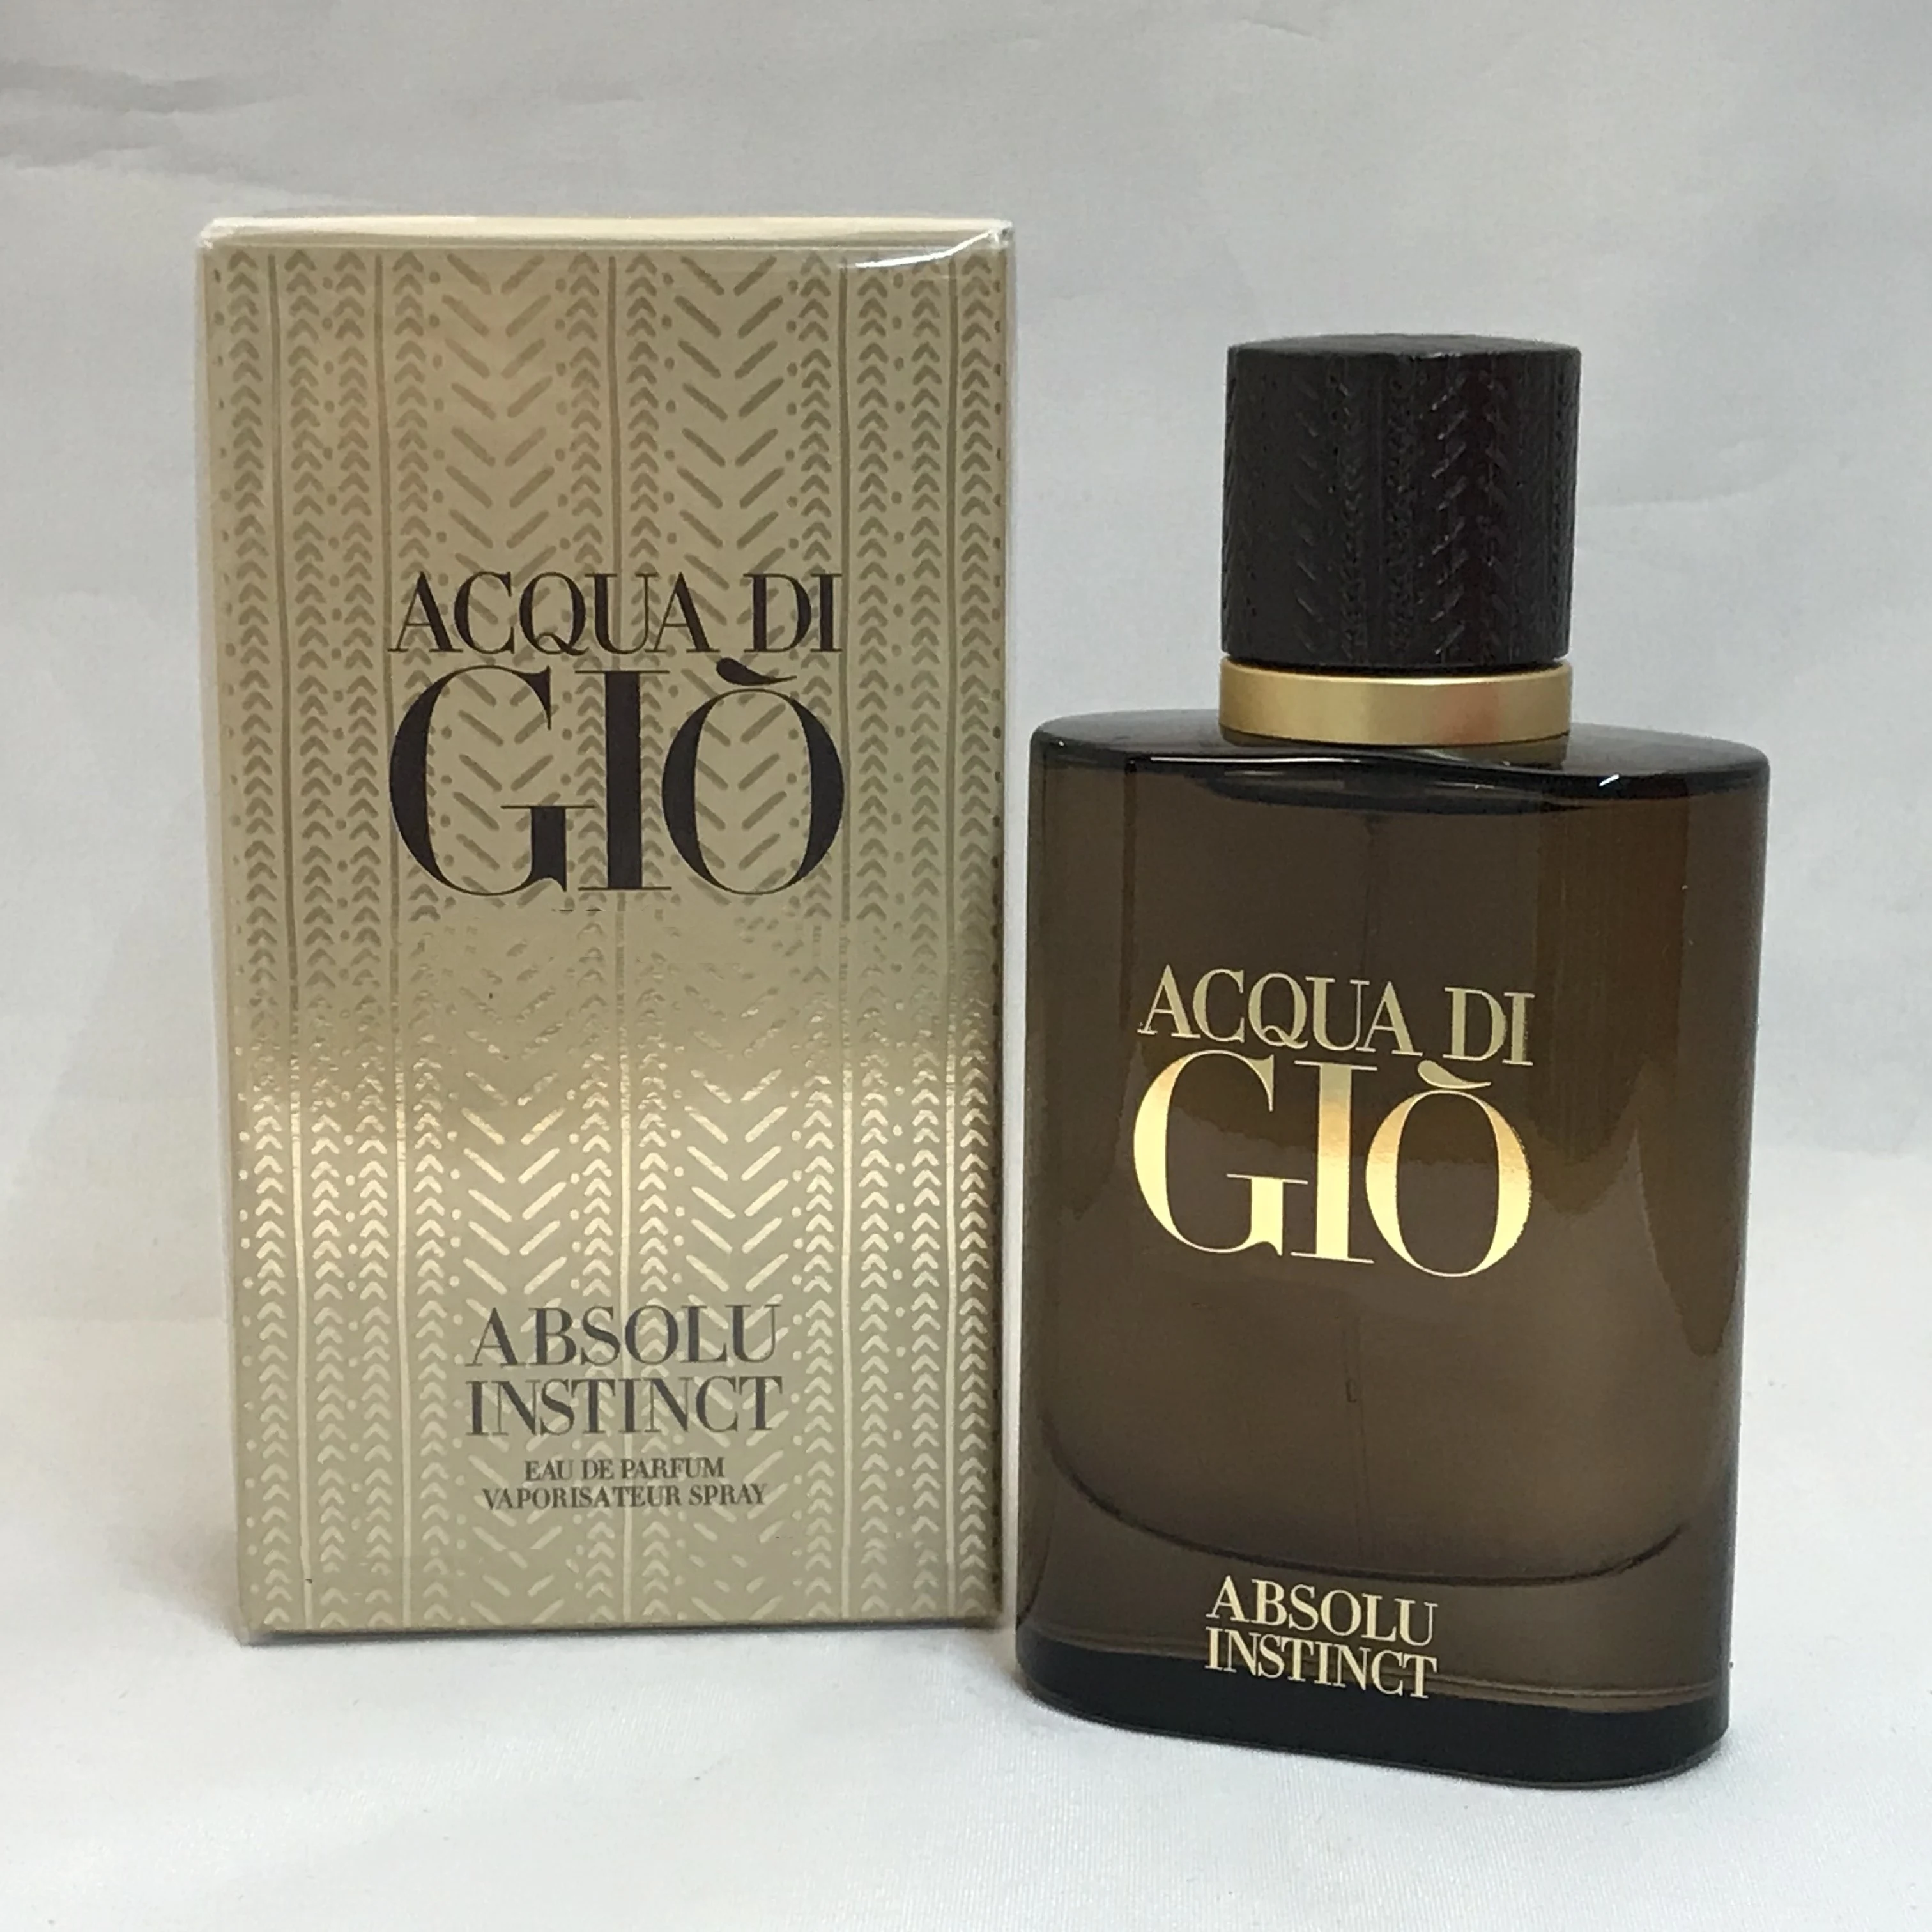 

Men's Parfumes Acqua Di Giò Absolu Instinct 125ml Woody Perfumes Spray Gift Body Spray Men's Deodorant Cologne for Men